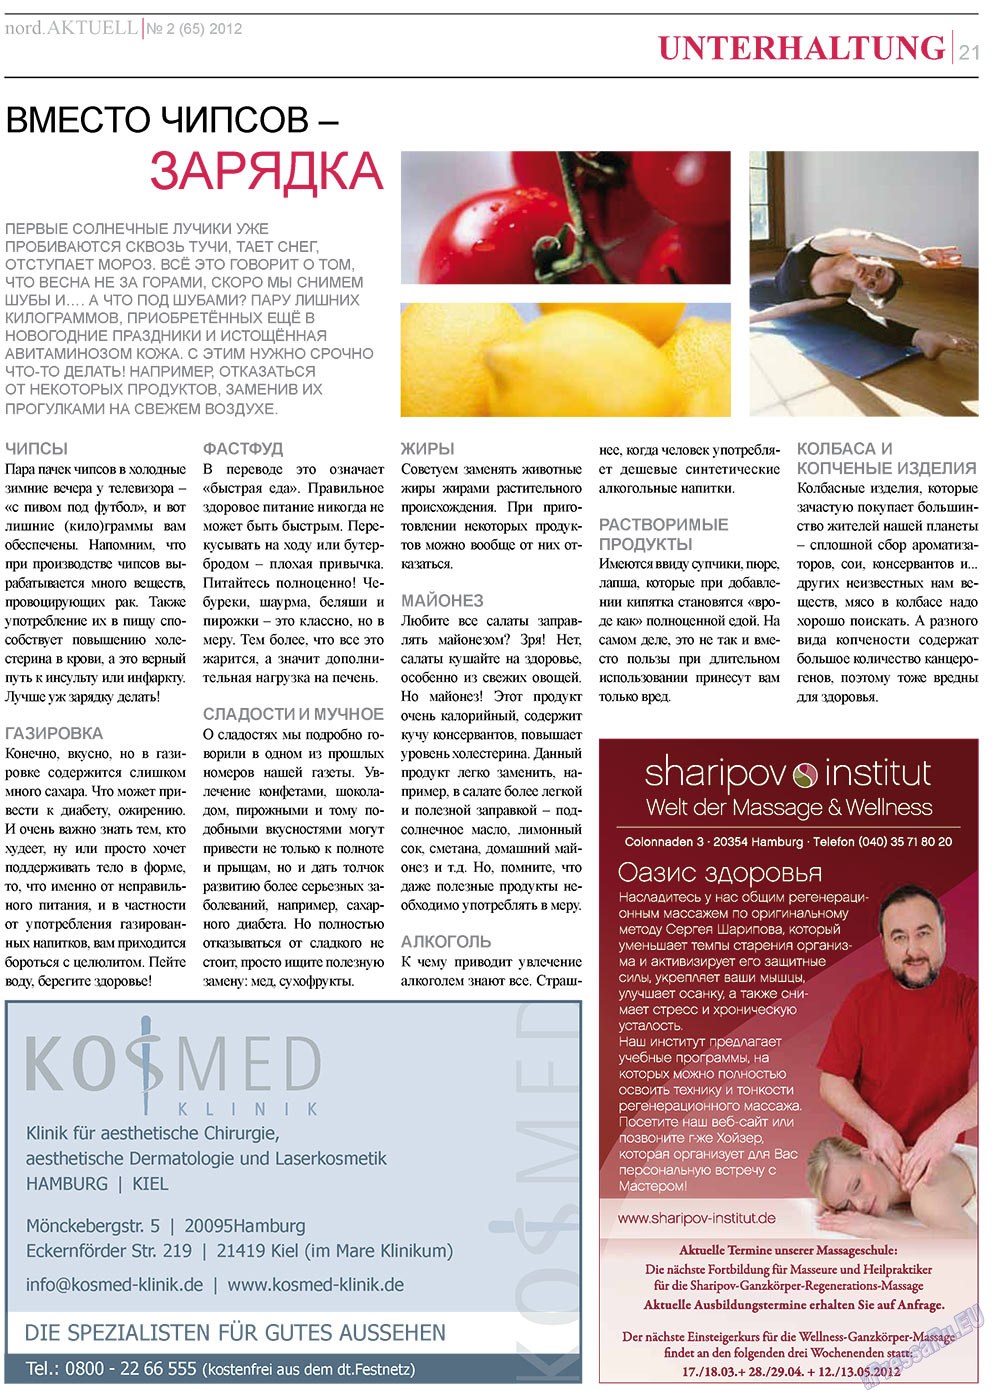 nord.Aktuell, газета. 2012 №2 стр.21